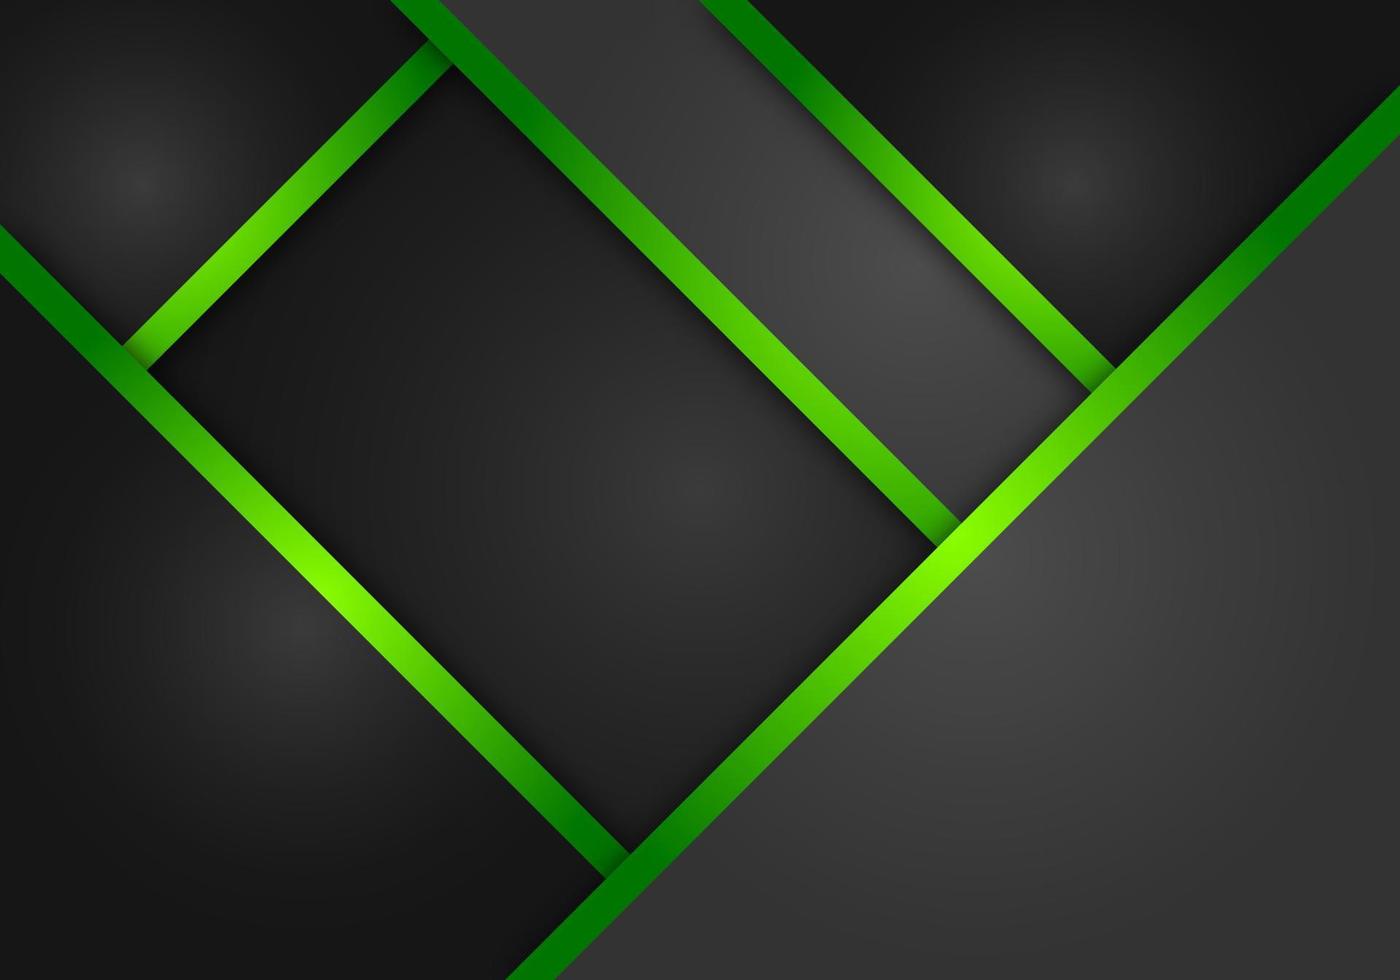 abstrakt grön pil mörkgrå skugga linje med tomt utrymme design modern futuristisk bakgrund geometriskt överlappande lager papperssnitt stil vektor